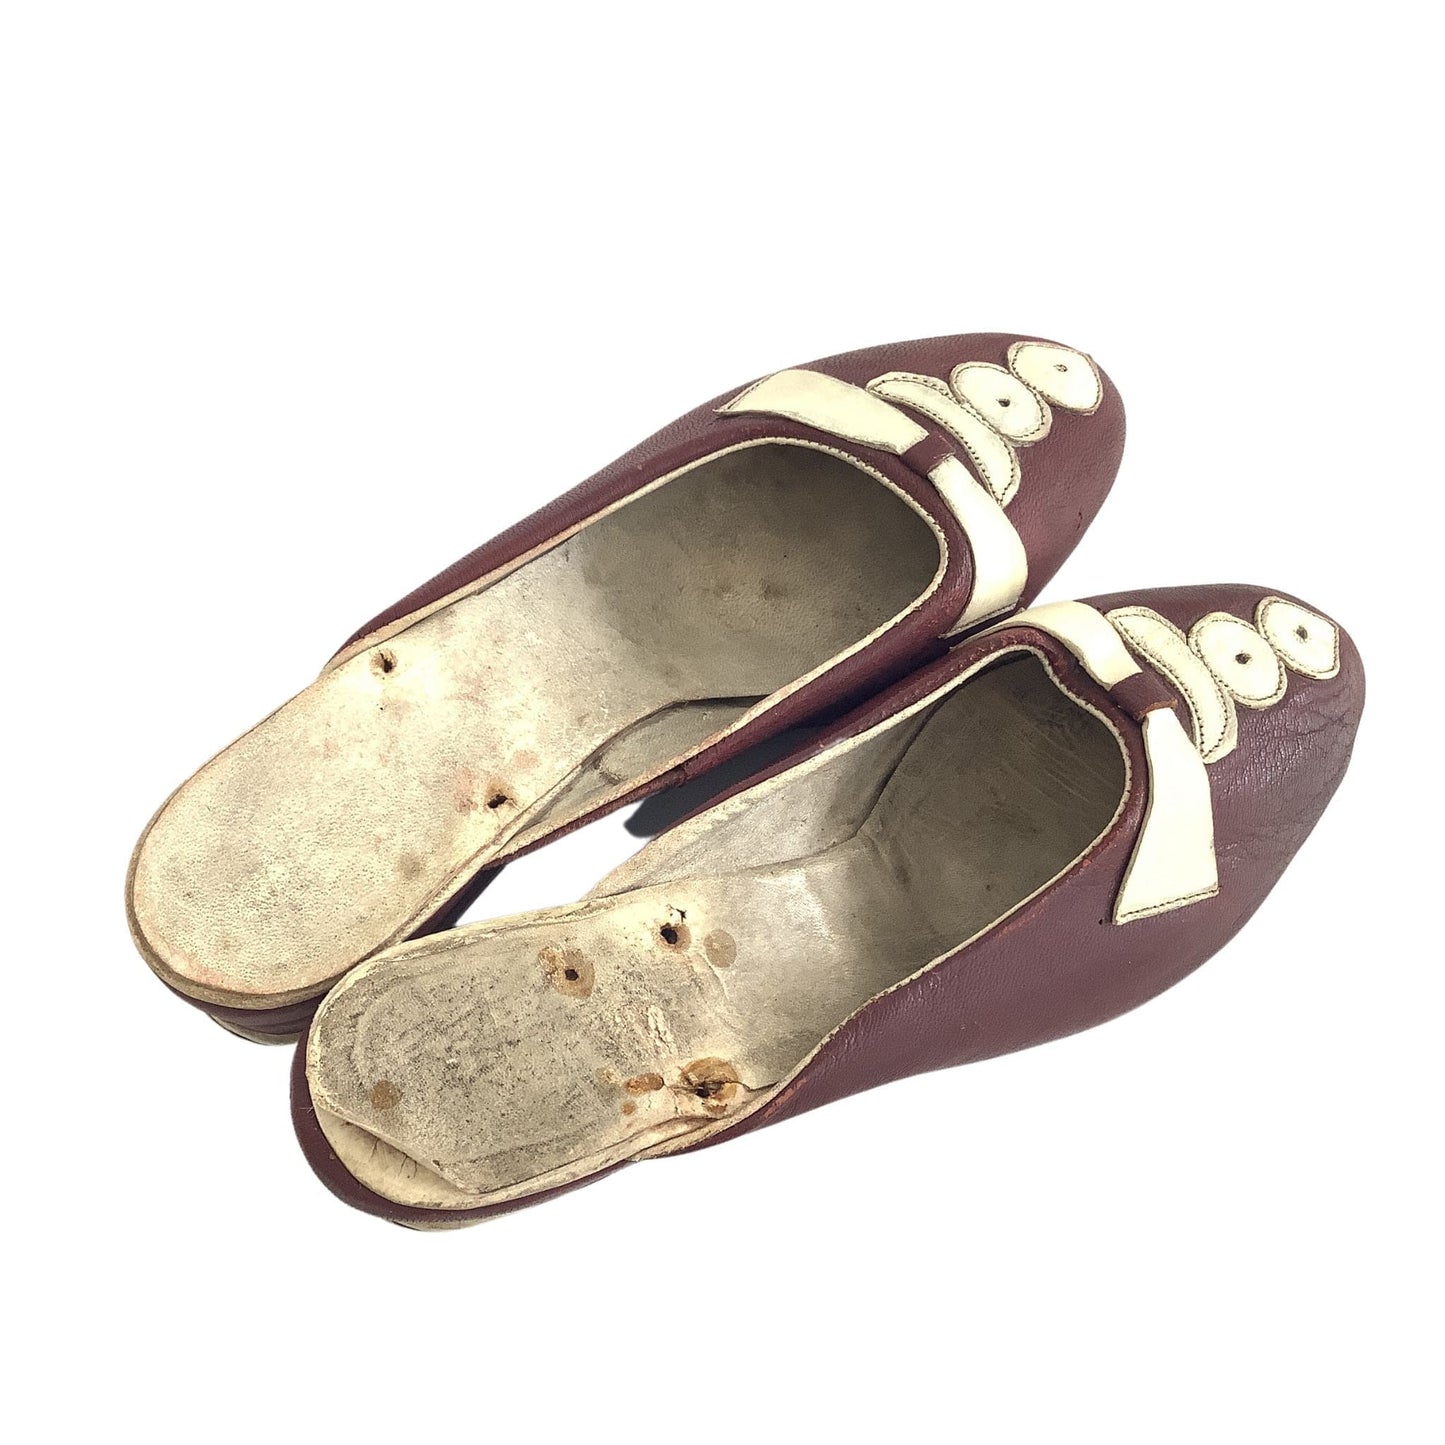 1920s Slip on Shoes 7 / Multi / Vintage 1920s